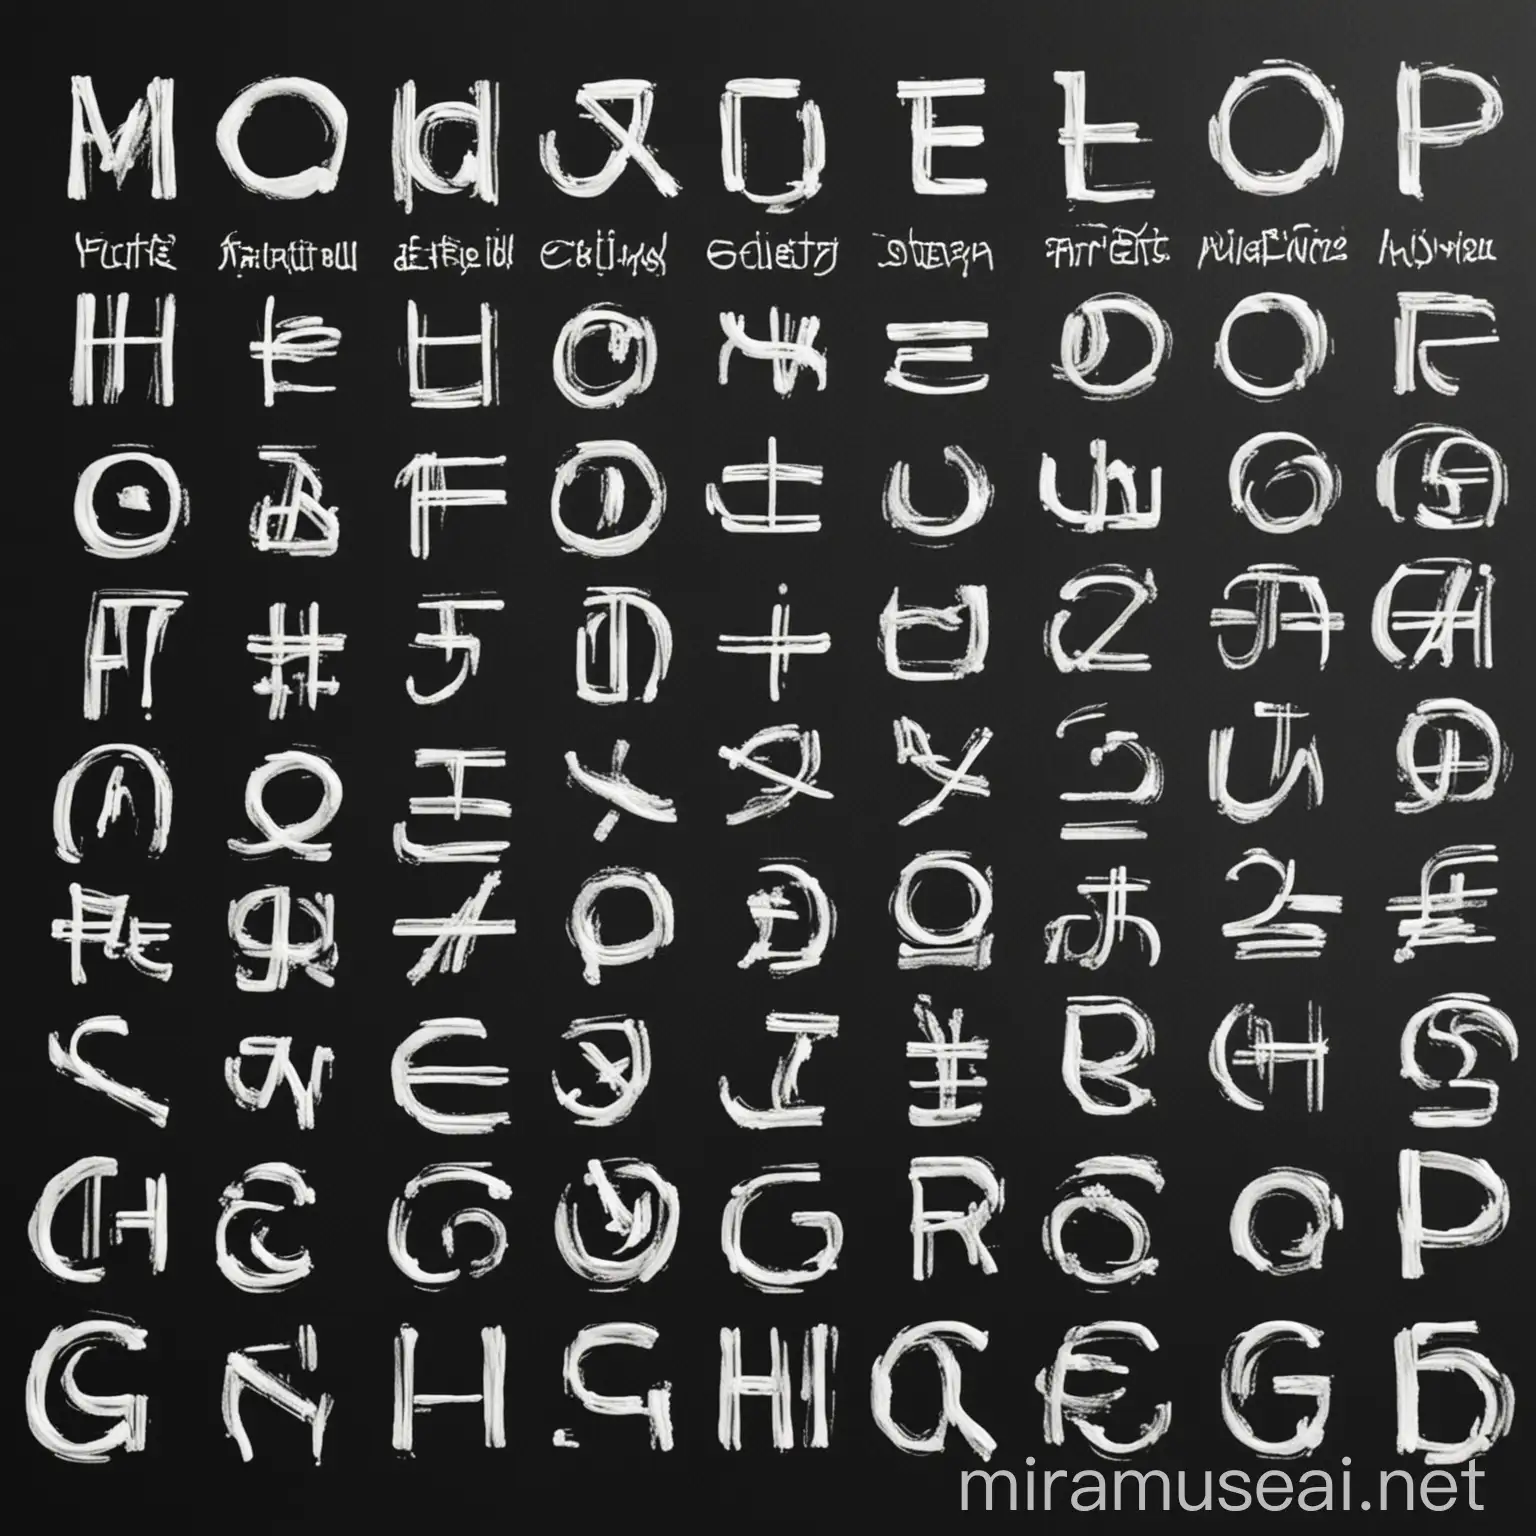 made up written language symbols